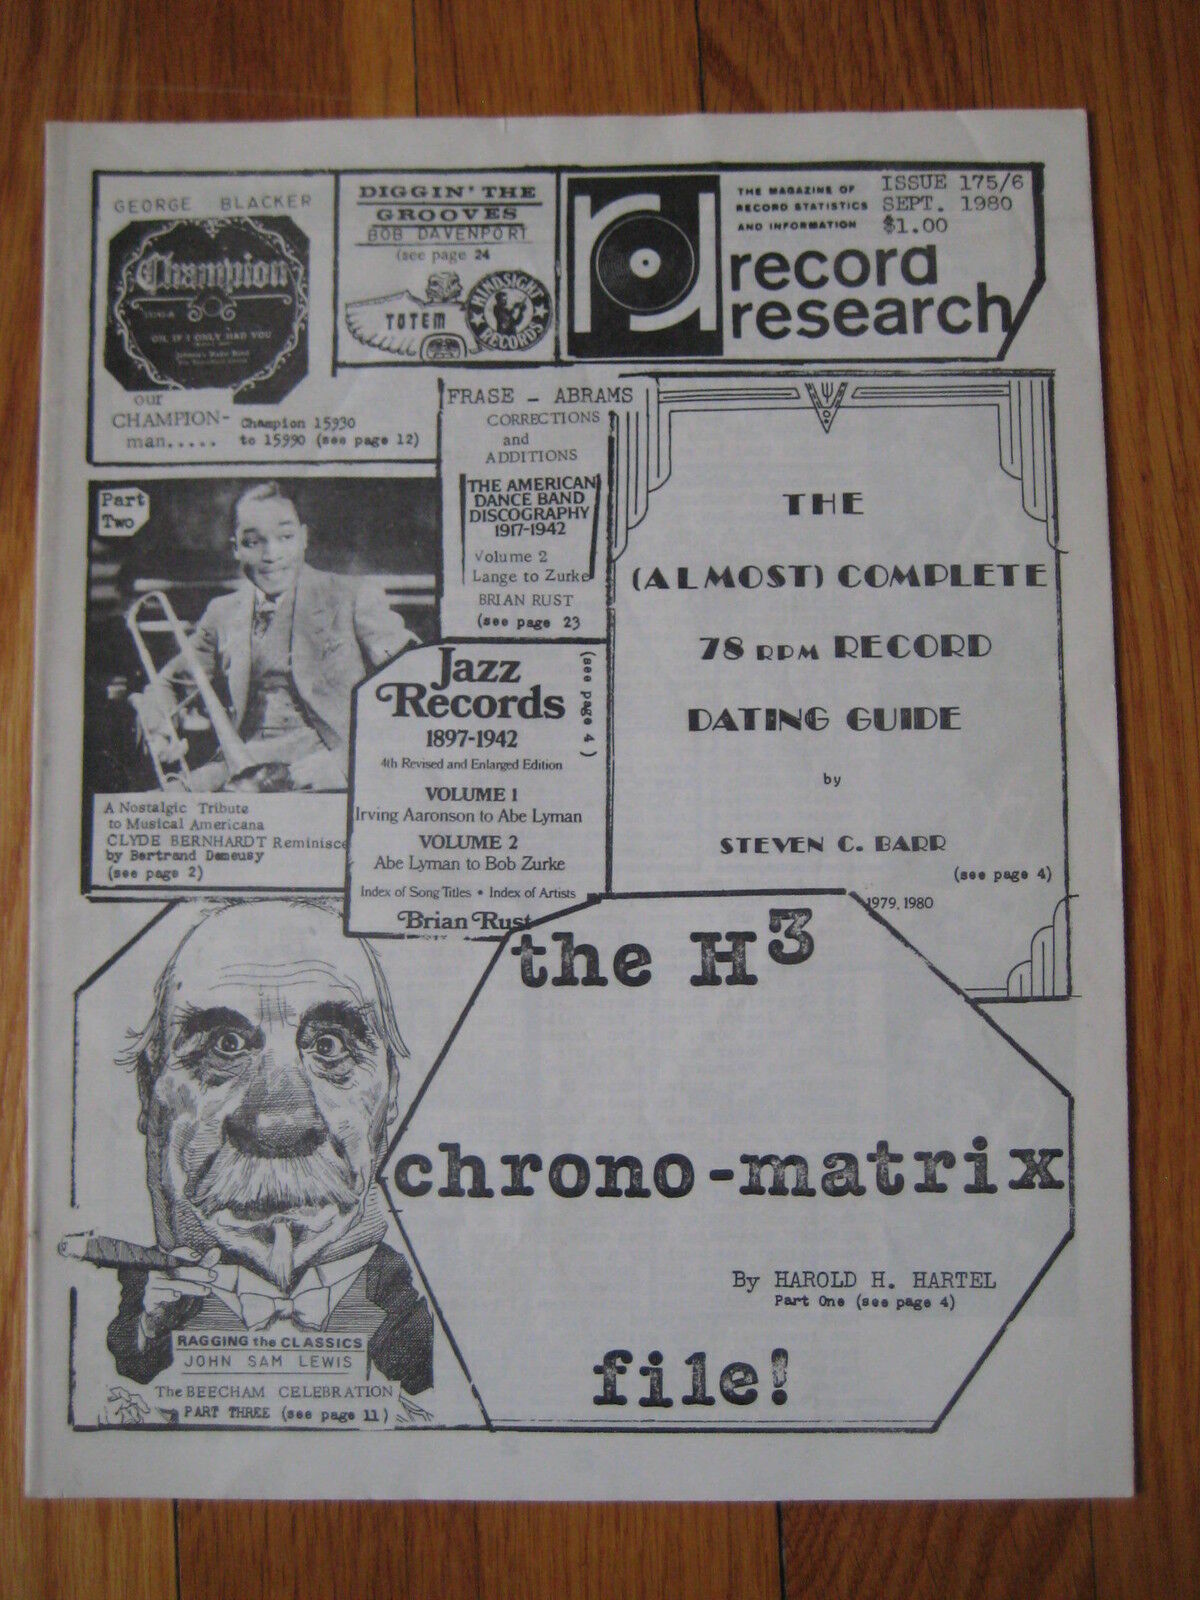 1980 vtg RECORD RESEARCH George Blacker H3 Chrono Matrix Clyde Bernhardt jazz